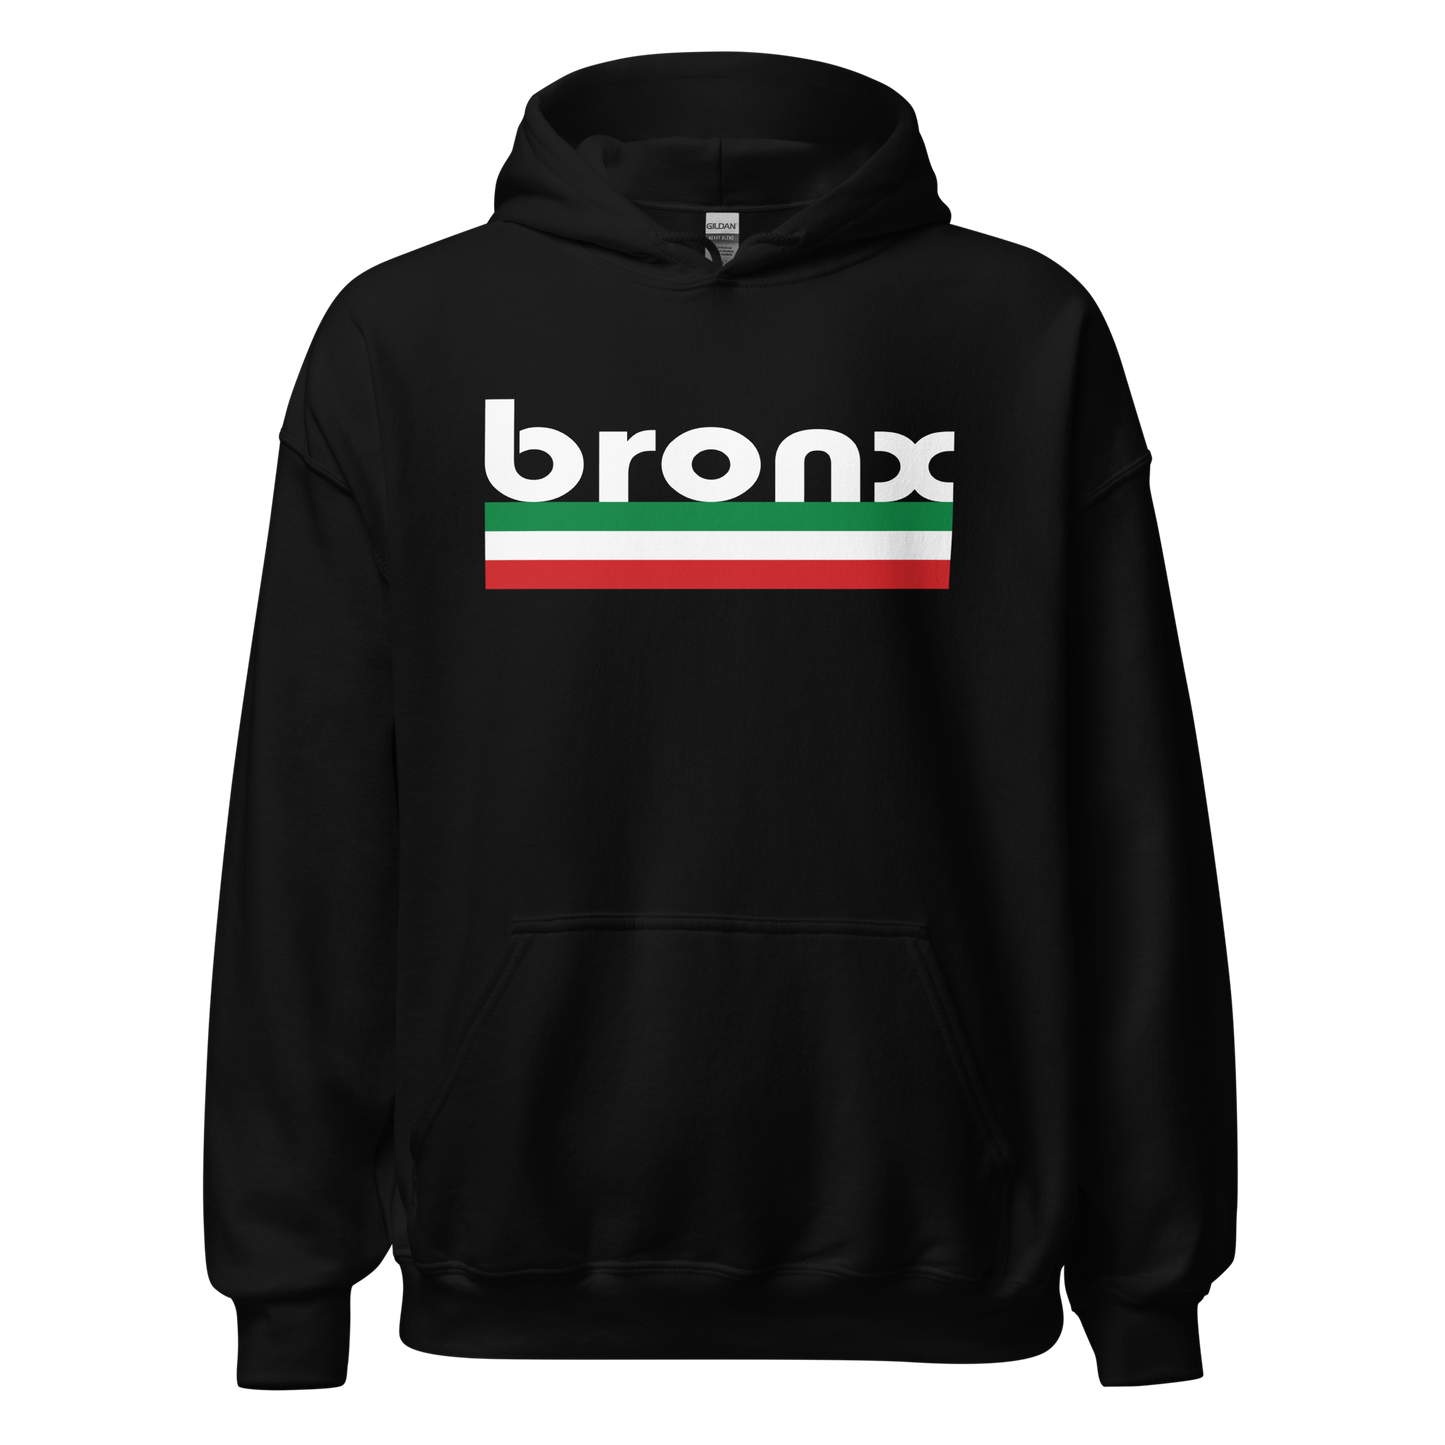 Bronx Italian Pride Hoodie- Vintage Flag Pullover for Bronx Italians